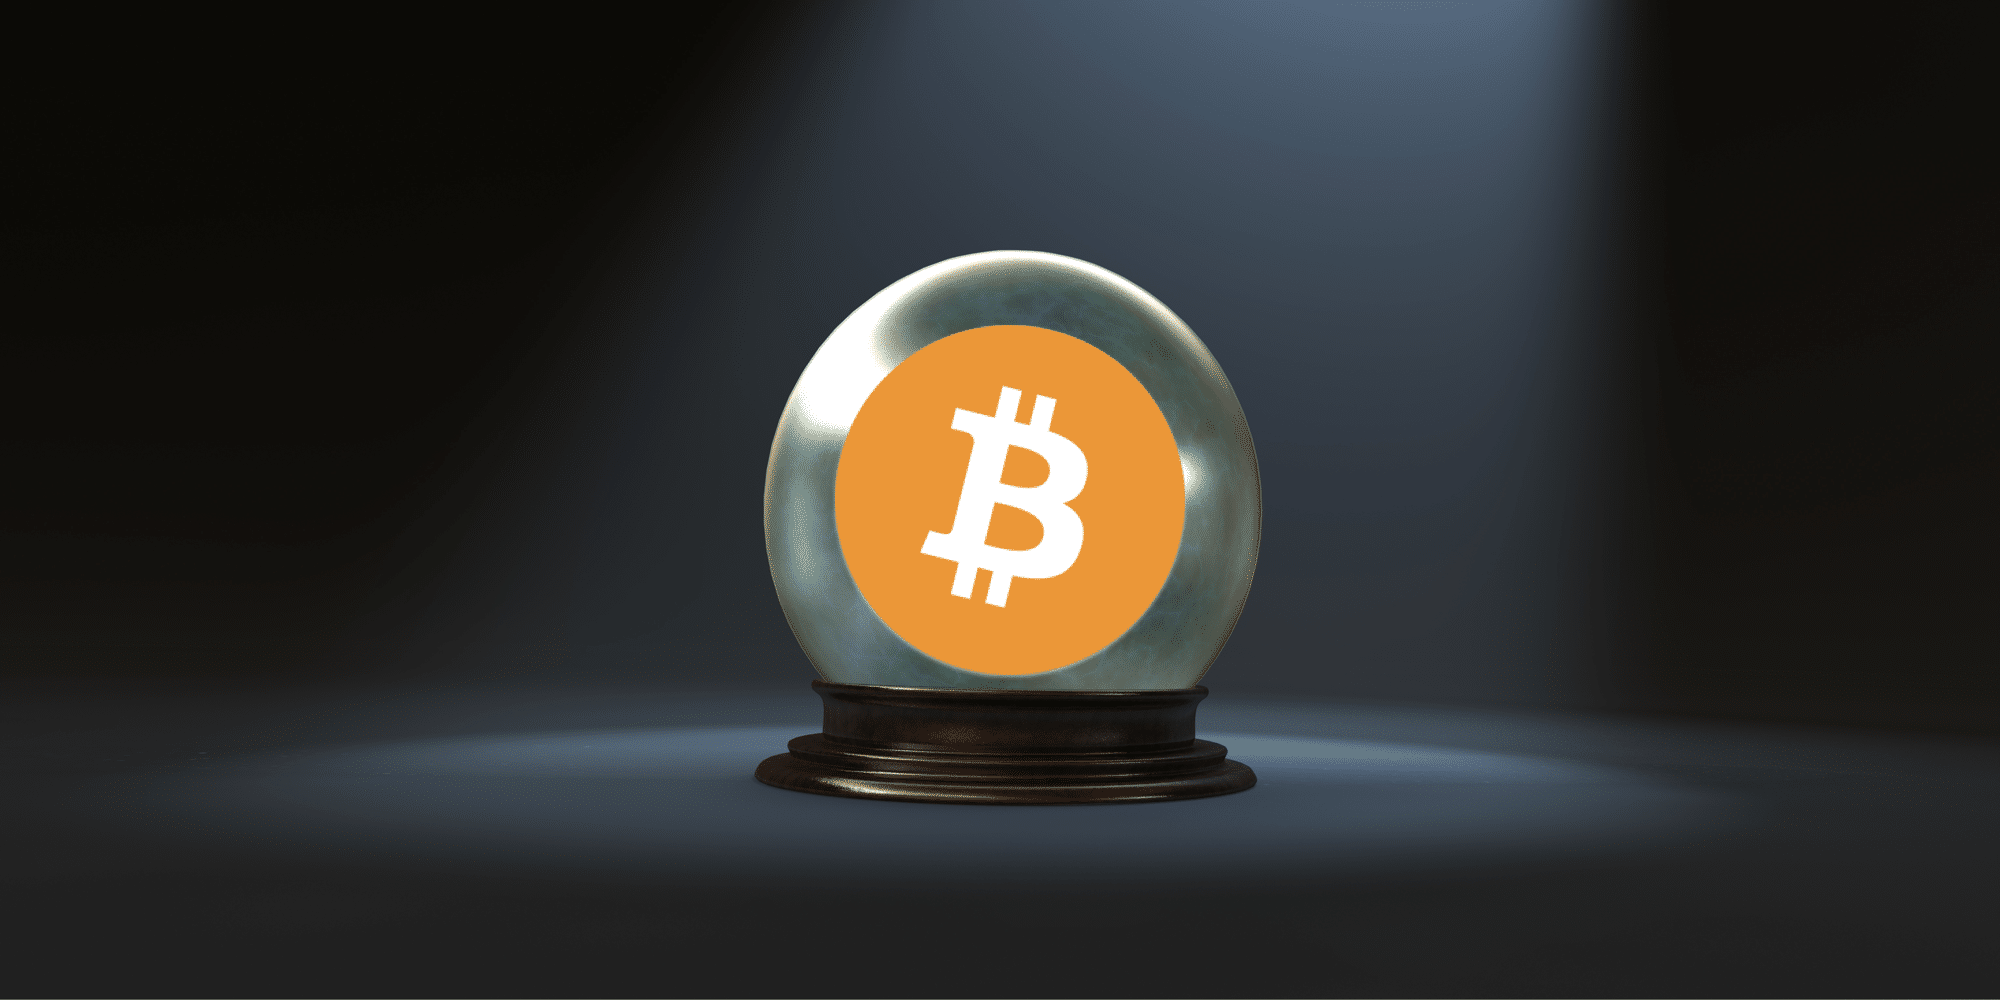 where can i buy bitcoin?